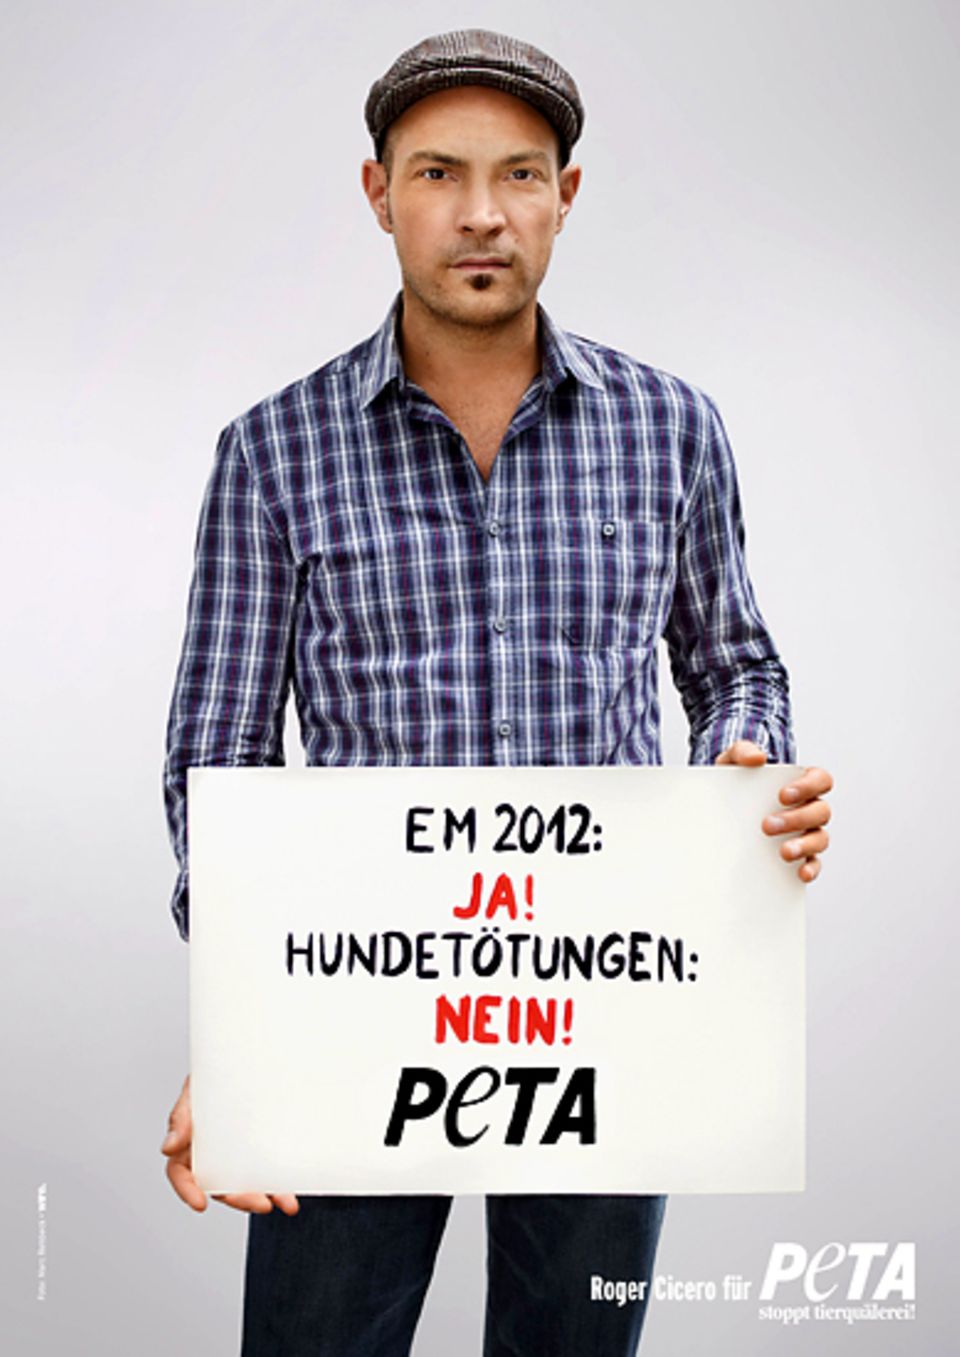 Als Sänger des offiziellen DFB-Fansongs engagiert sich Roger Cicero mit PETA gegen Tierquälerei im Gastgeberland der EM 2012.